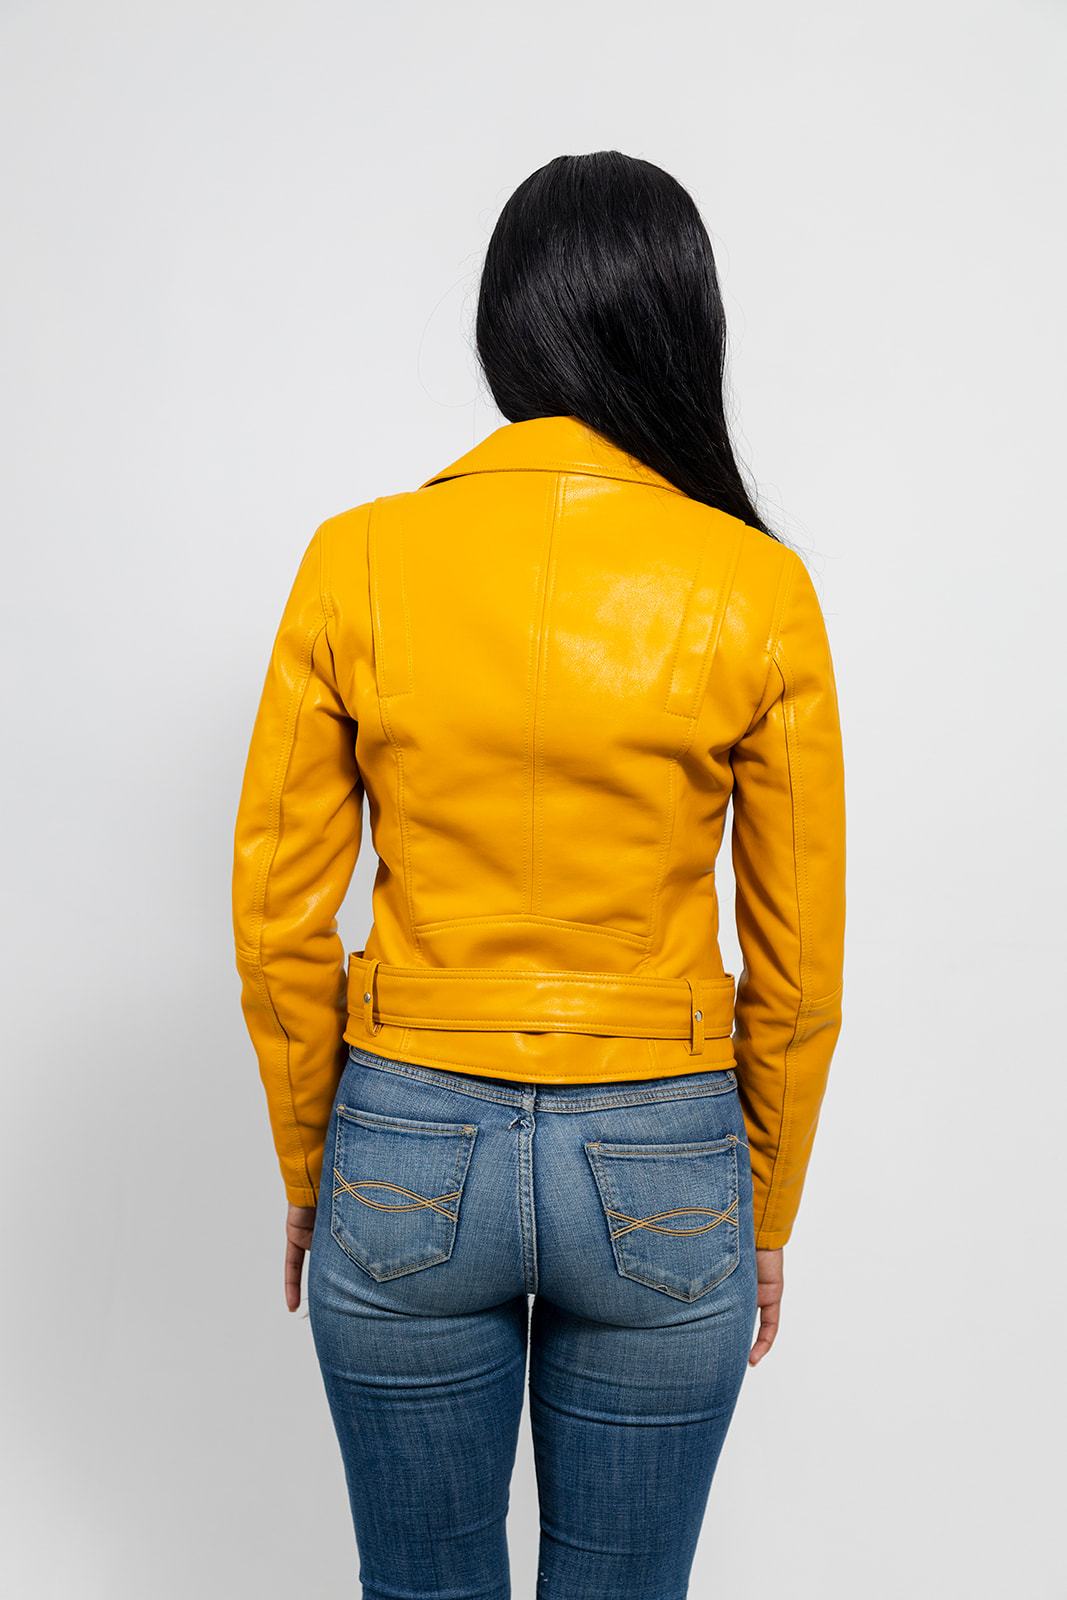 Remy - Women's Vegan Faux Leather Jacket (Mustard) Women's Fashion Leather Jacket Whet Blu NYC   